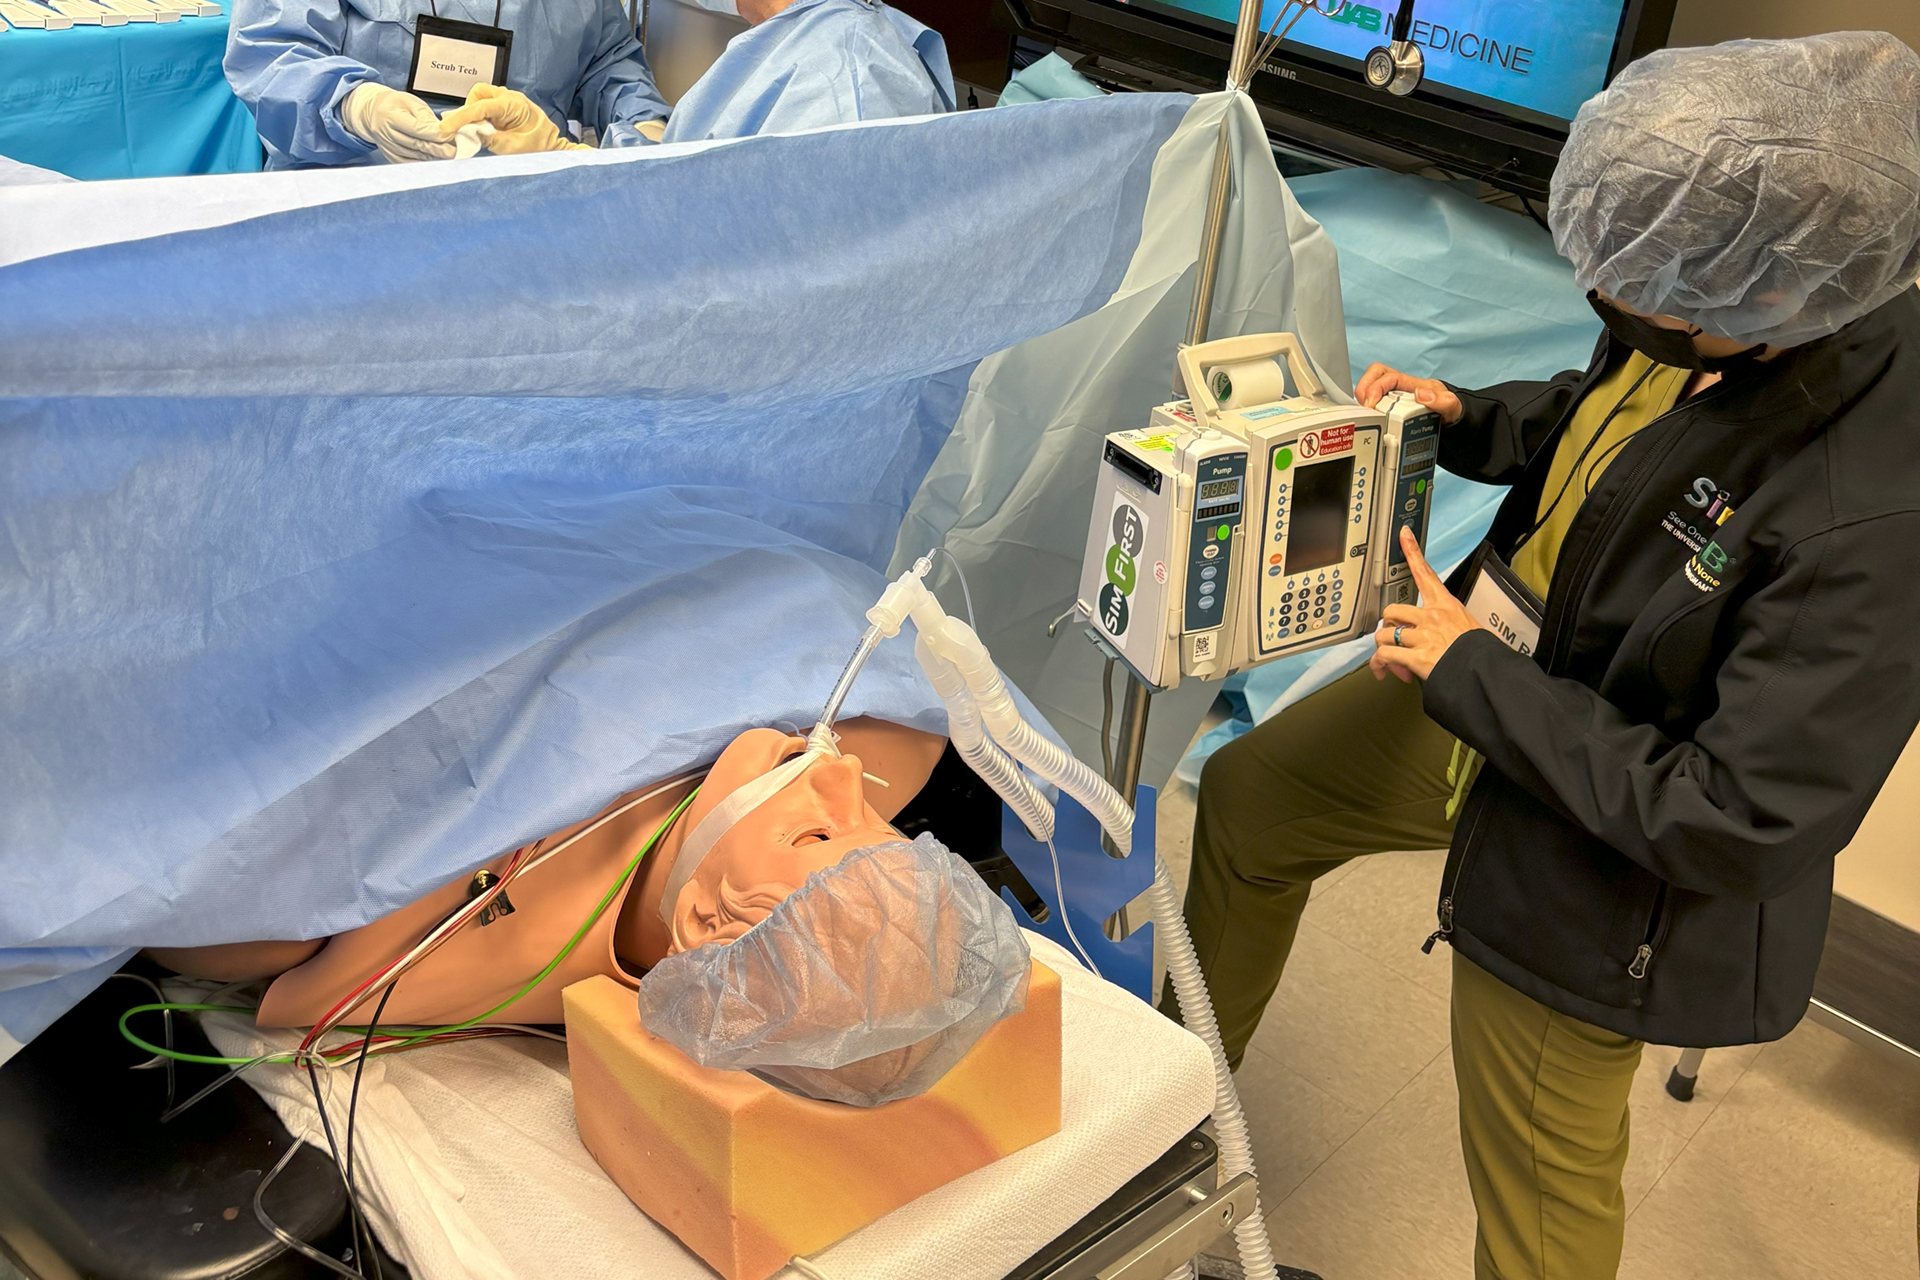 A woman in medical scrubs and a UAB Medicine jacket training on a simulation manikin.